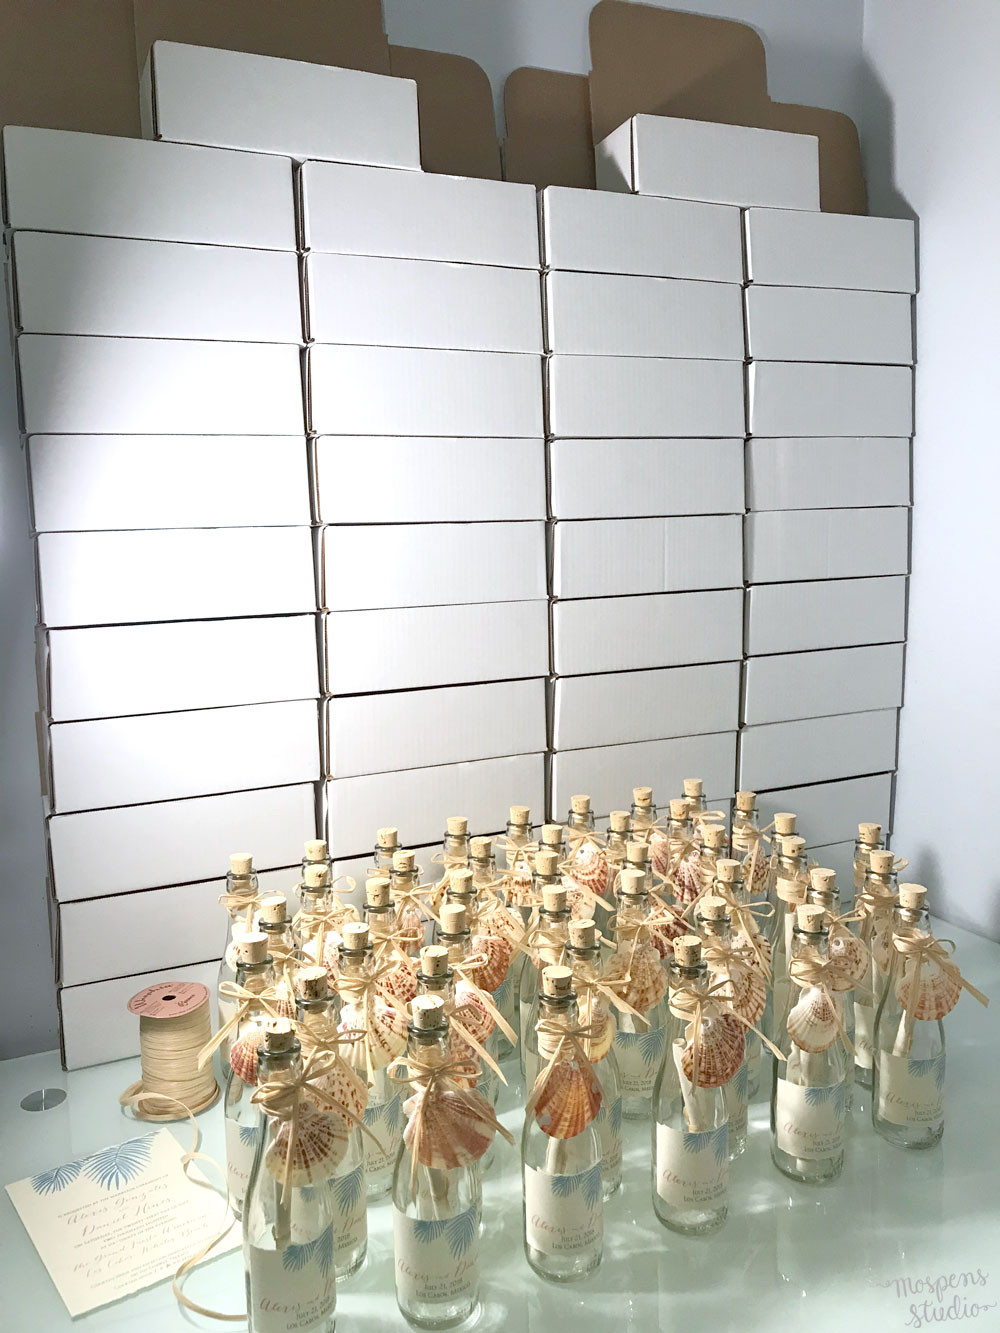 Beautiful beach wedding invitations in bottles by Mospens Studio.